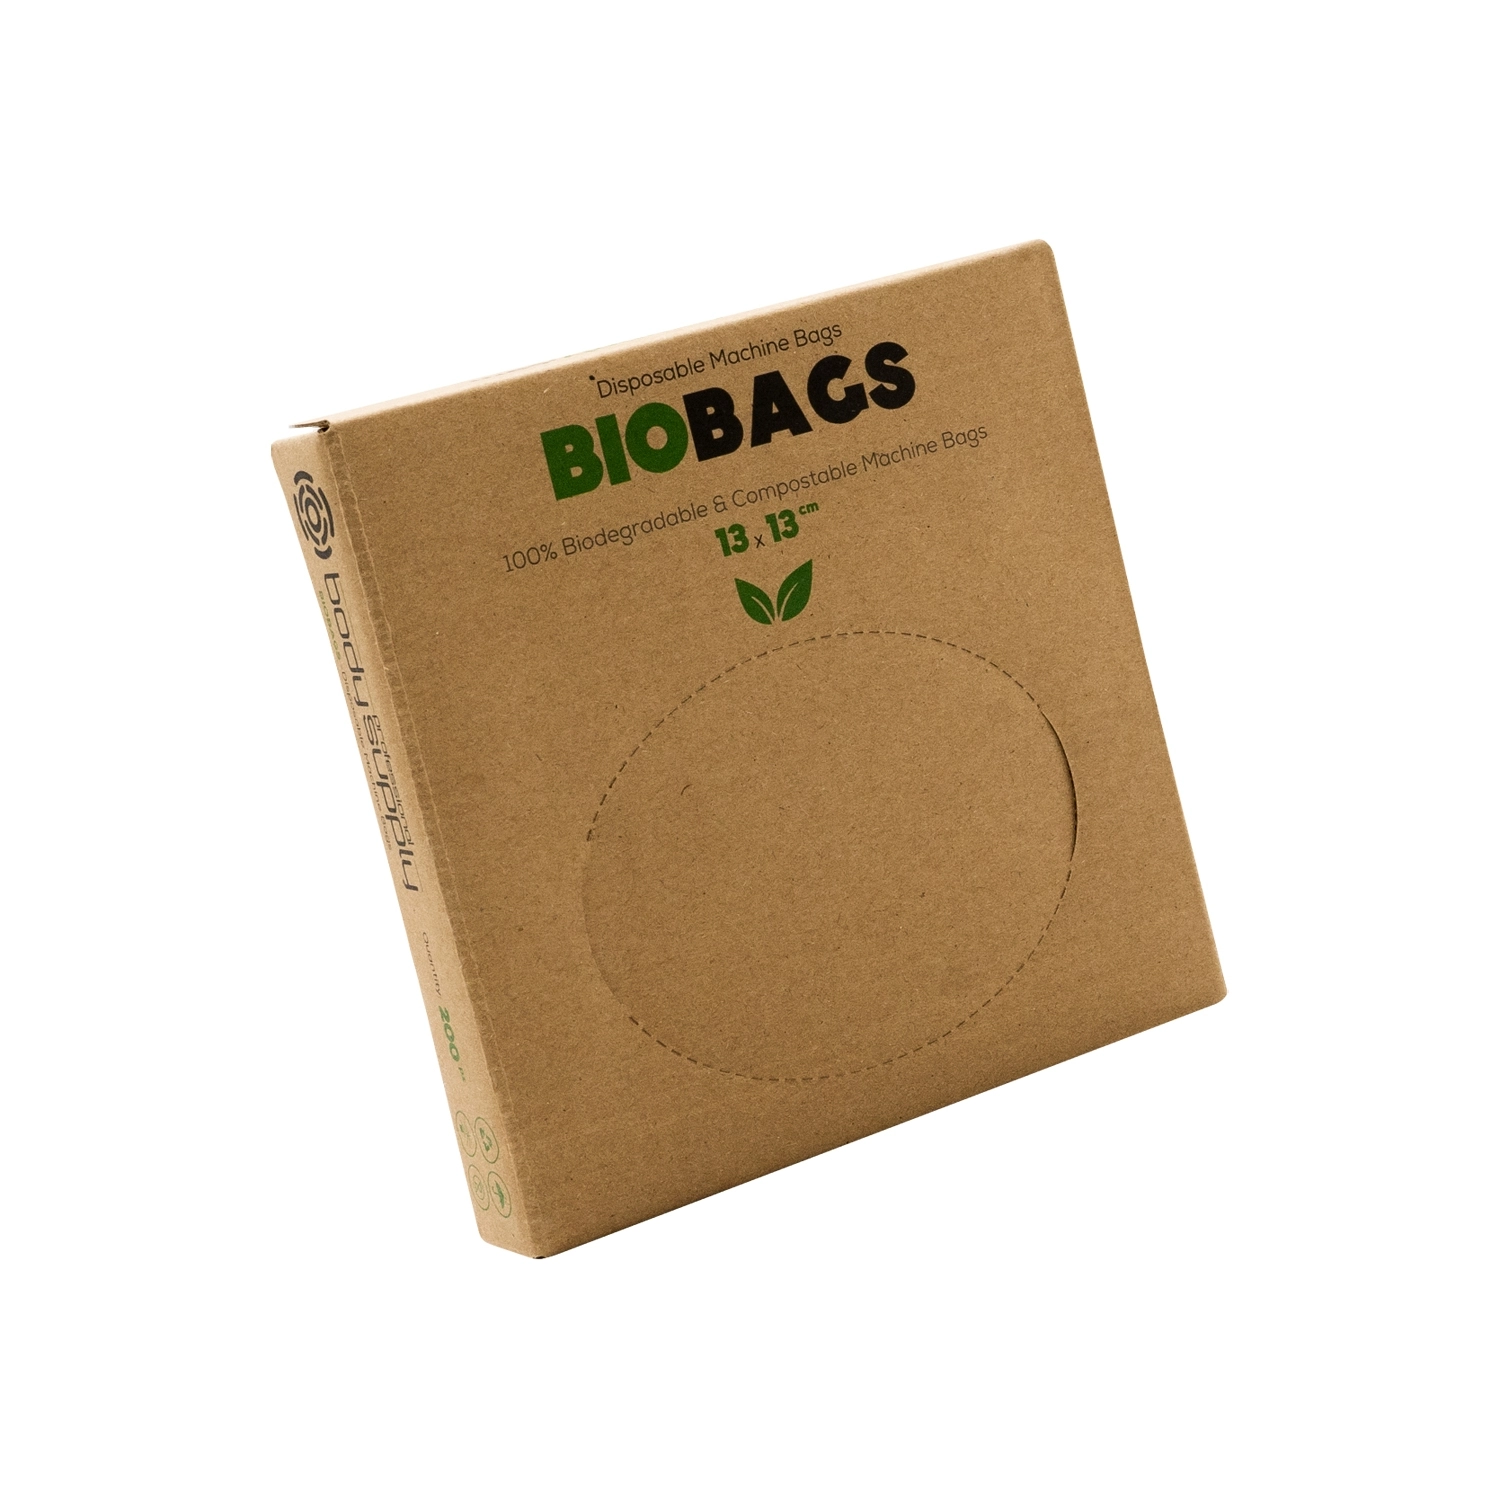 BodySupply Biodegradable Machine Bags 200 unités - 13x13cm